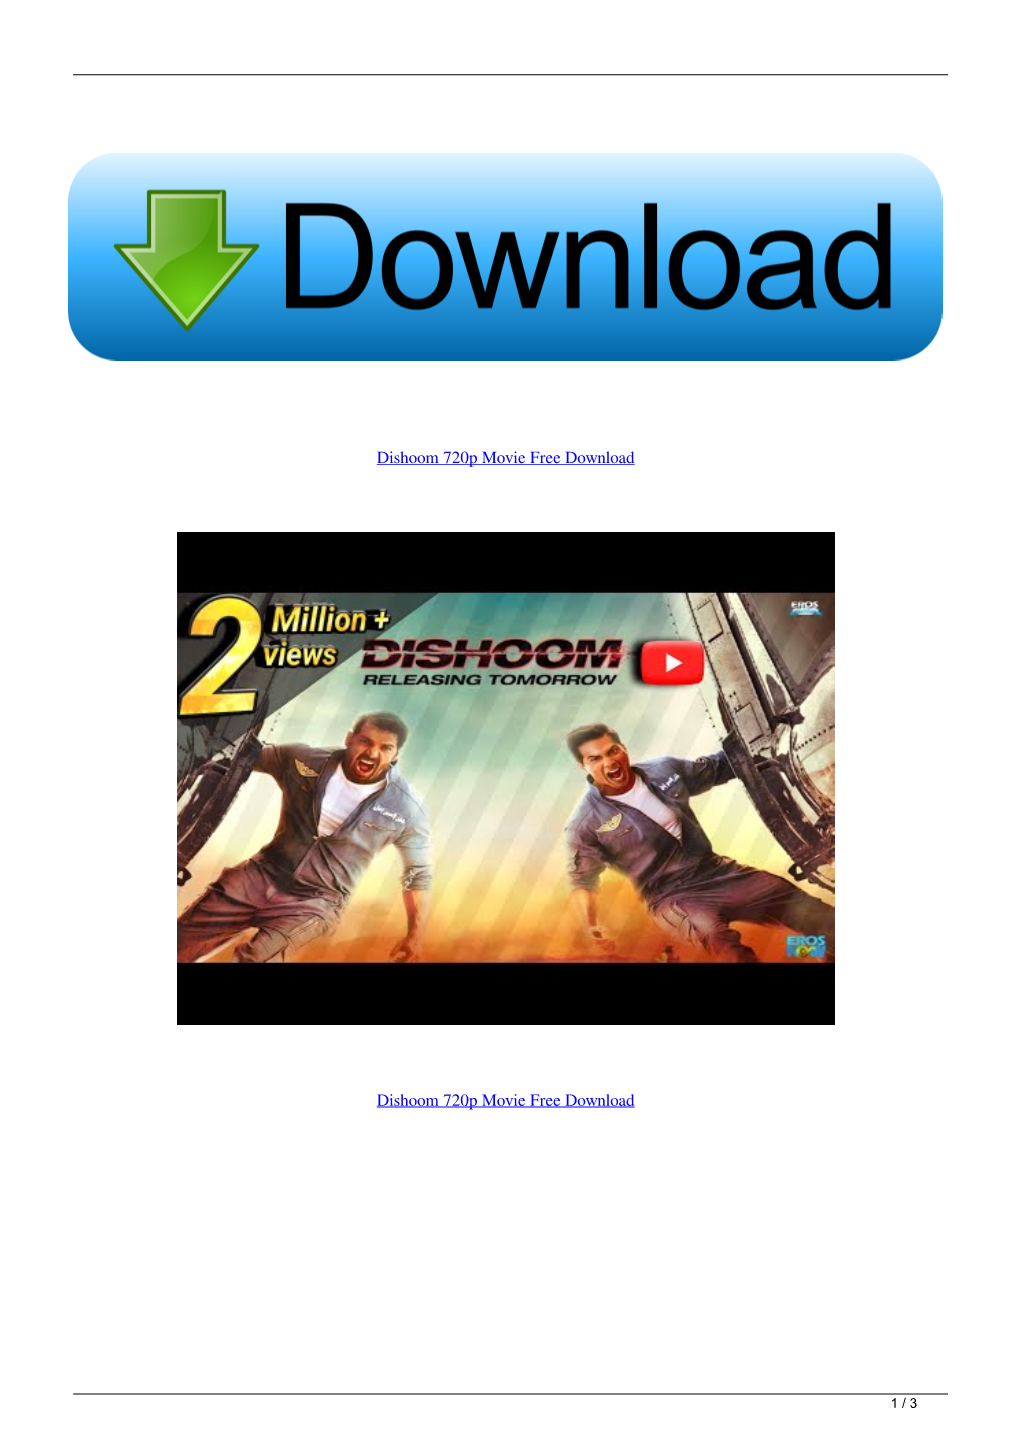 Dishoom 720P Movie Free Download